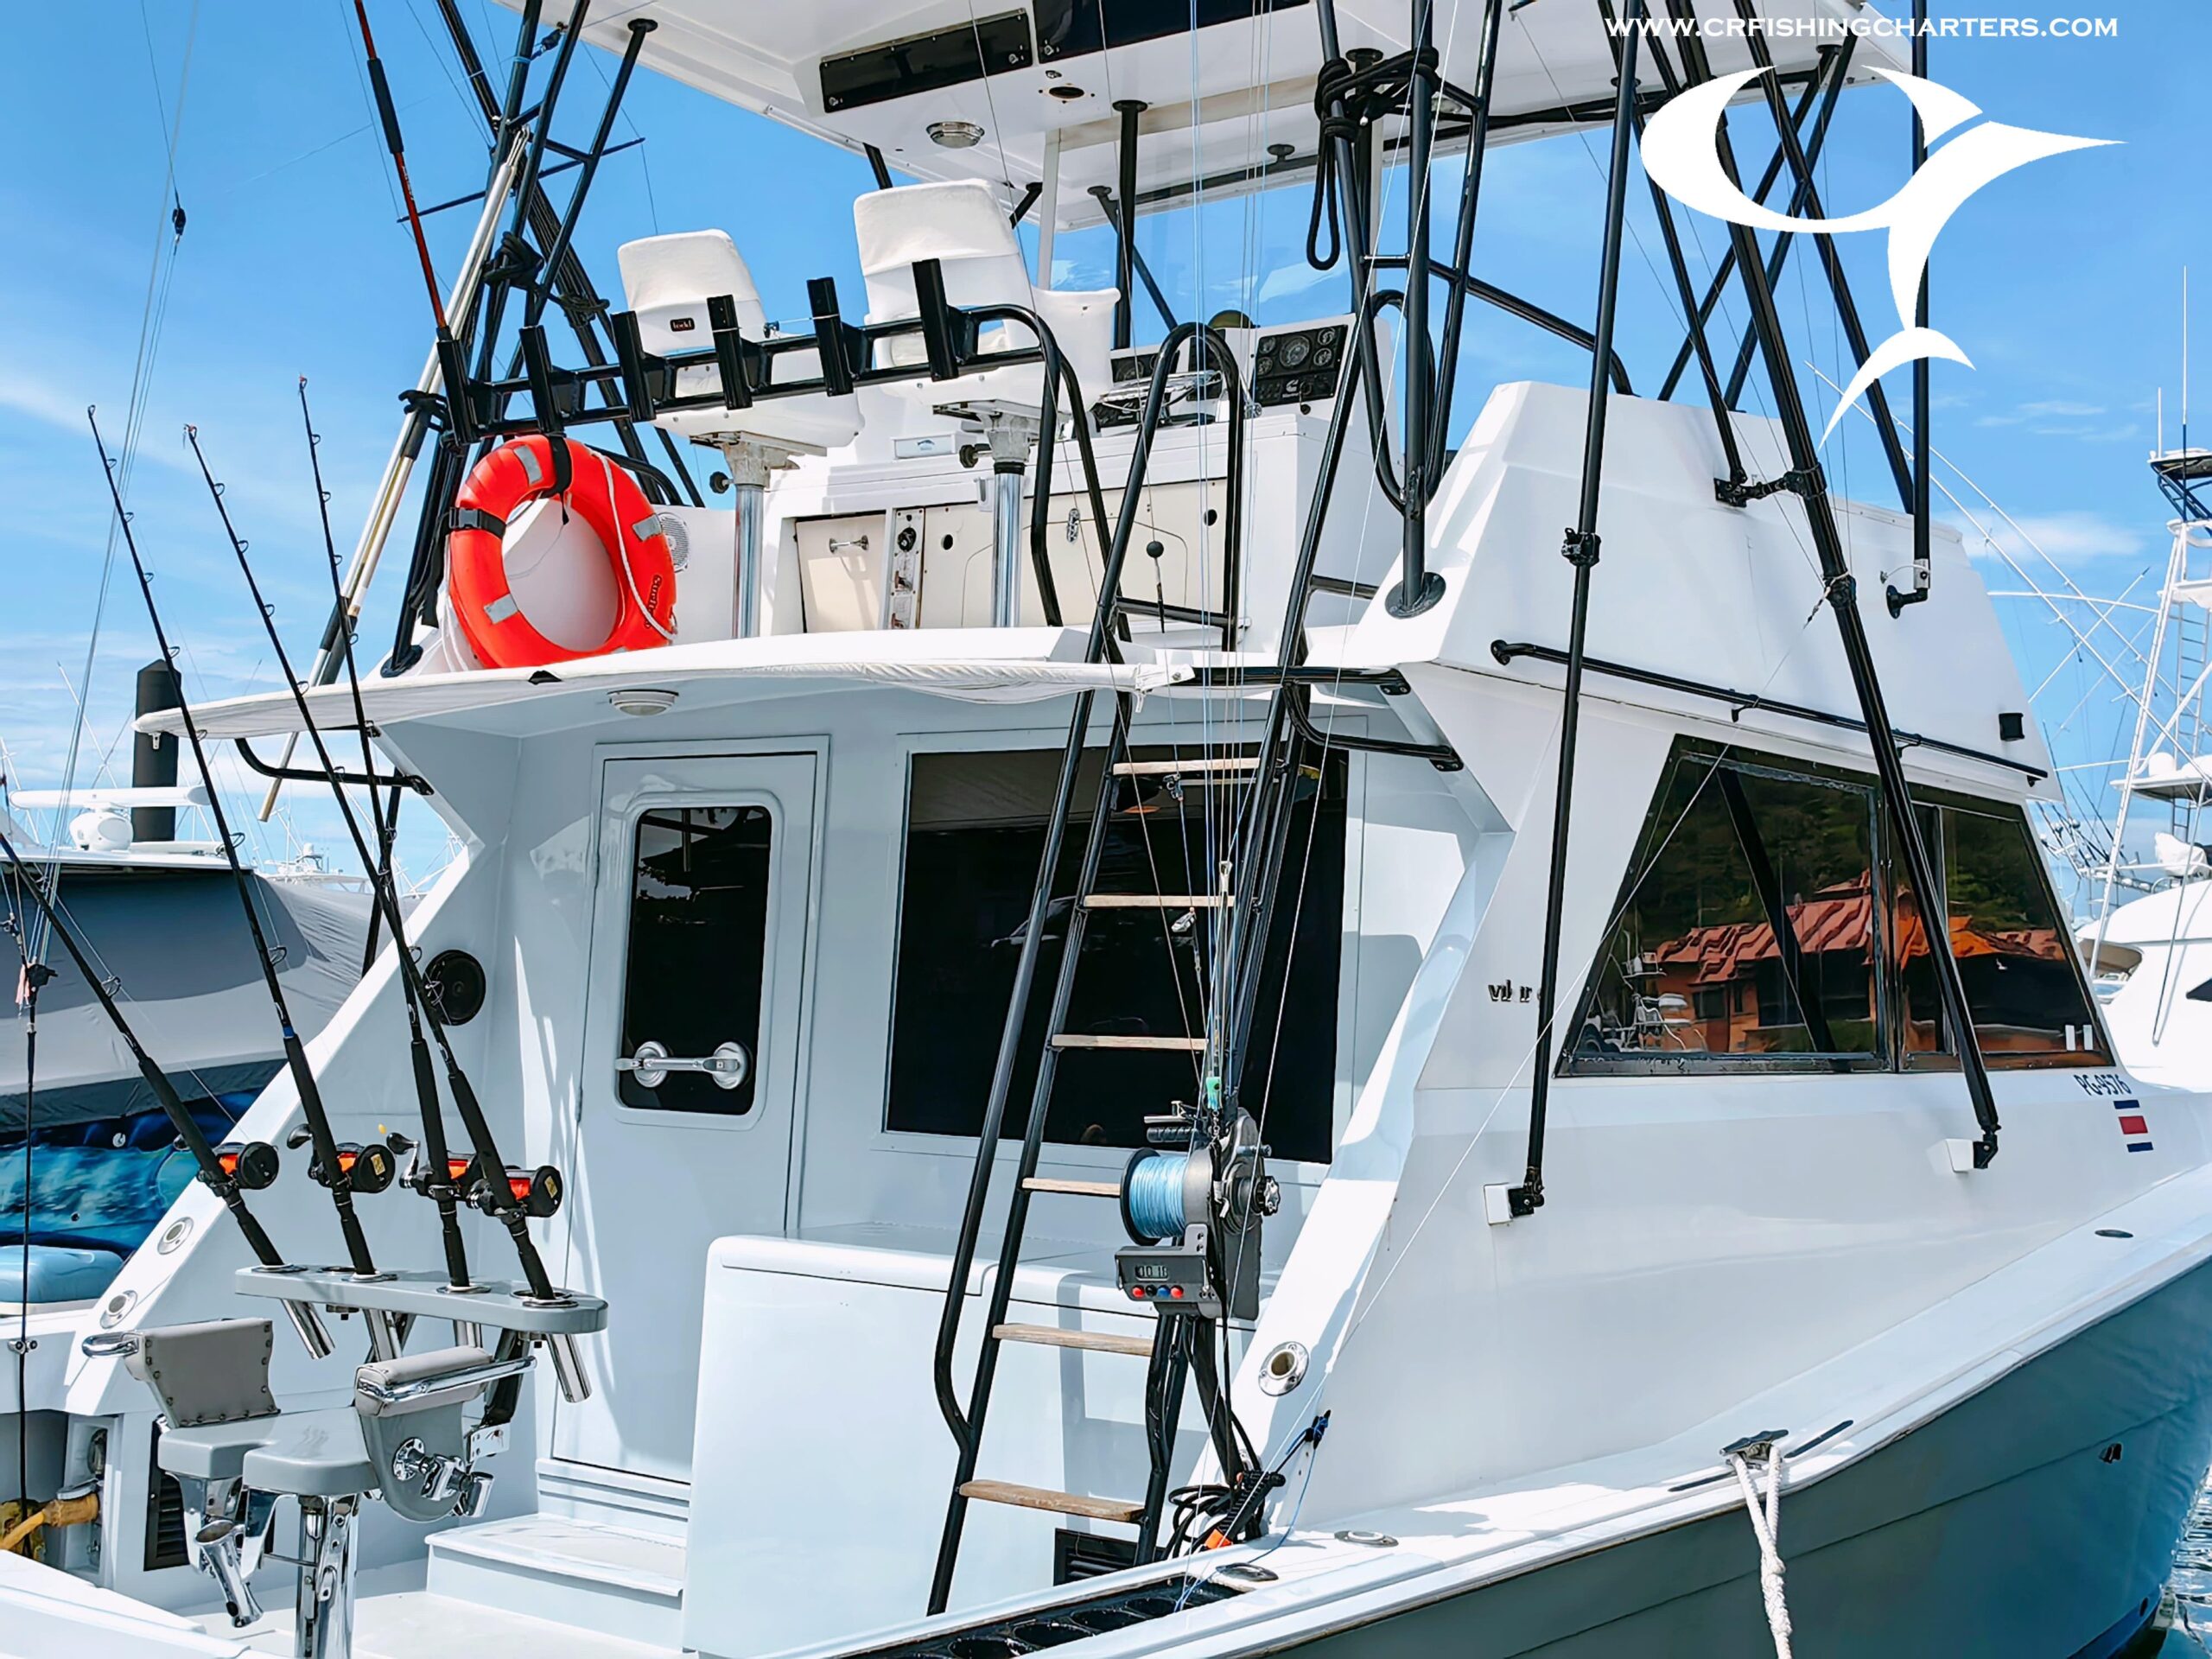 43 ft. Viking Sportfish-Sueltalo 2, 6 anglers max, Los Suenos by CR Fishing  Charters